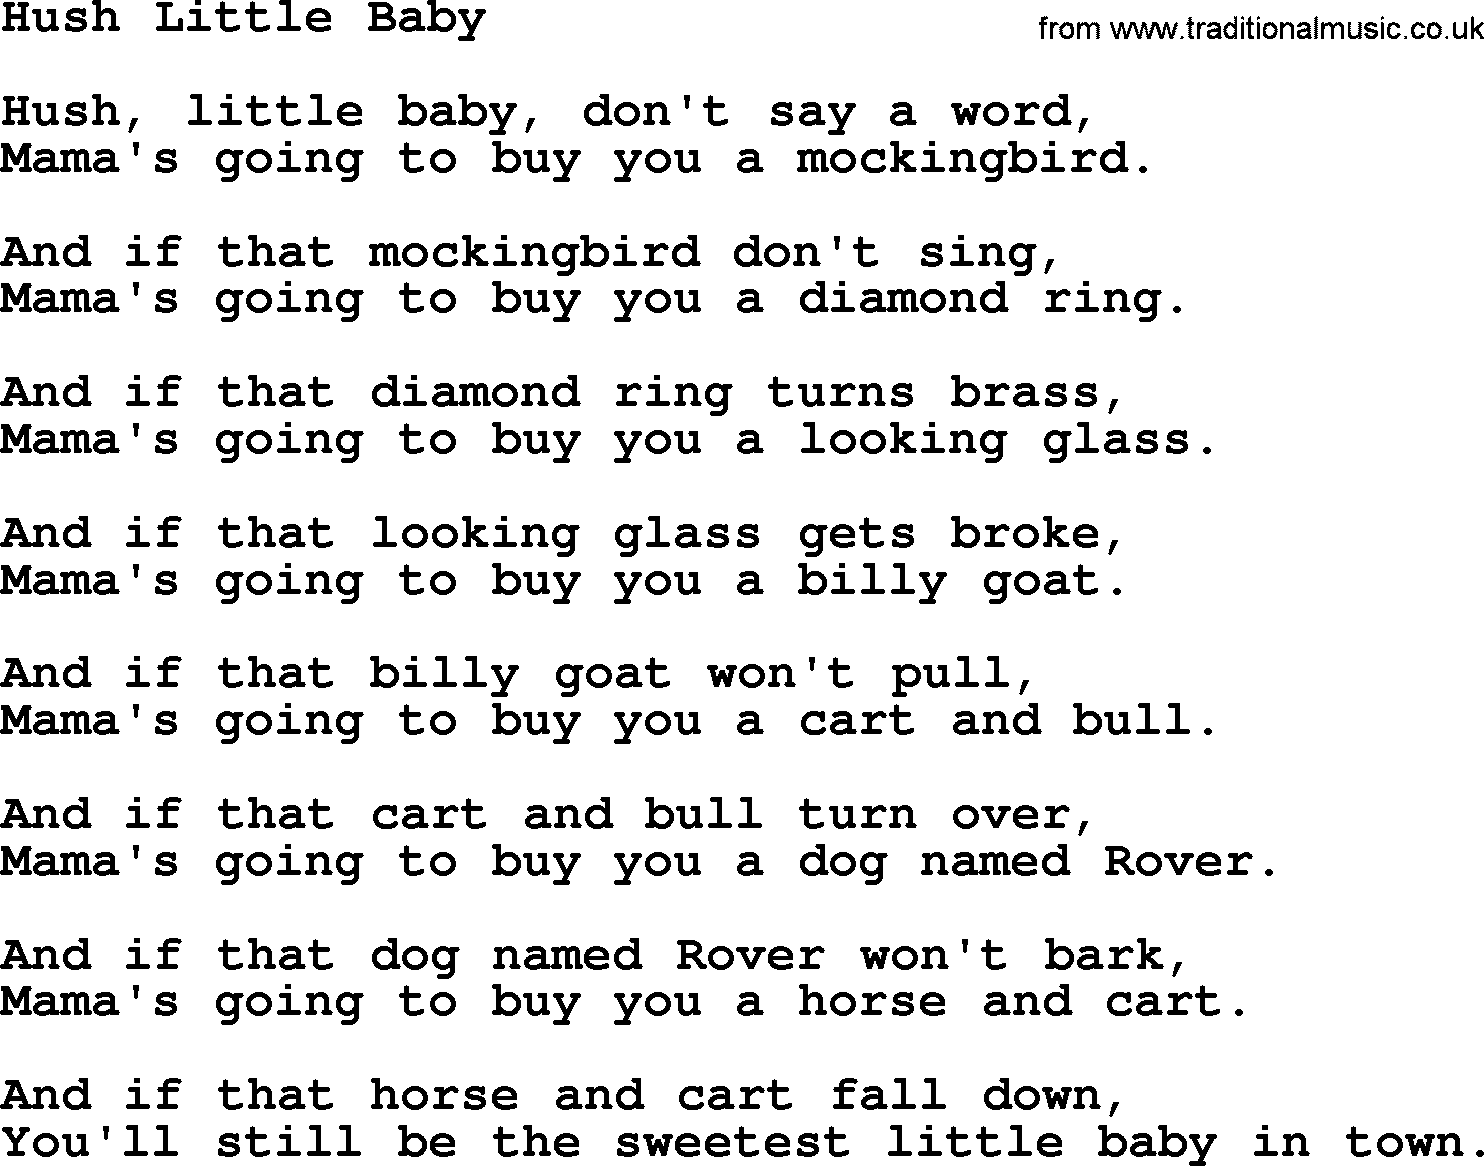 Joan Baez song Hush Little Baby, lyrics